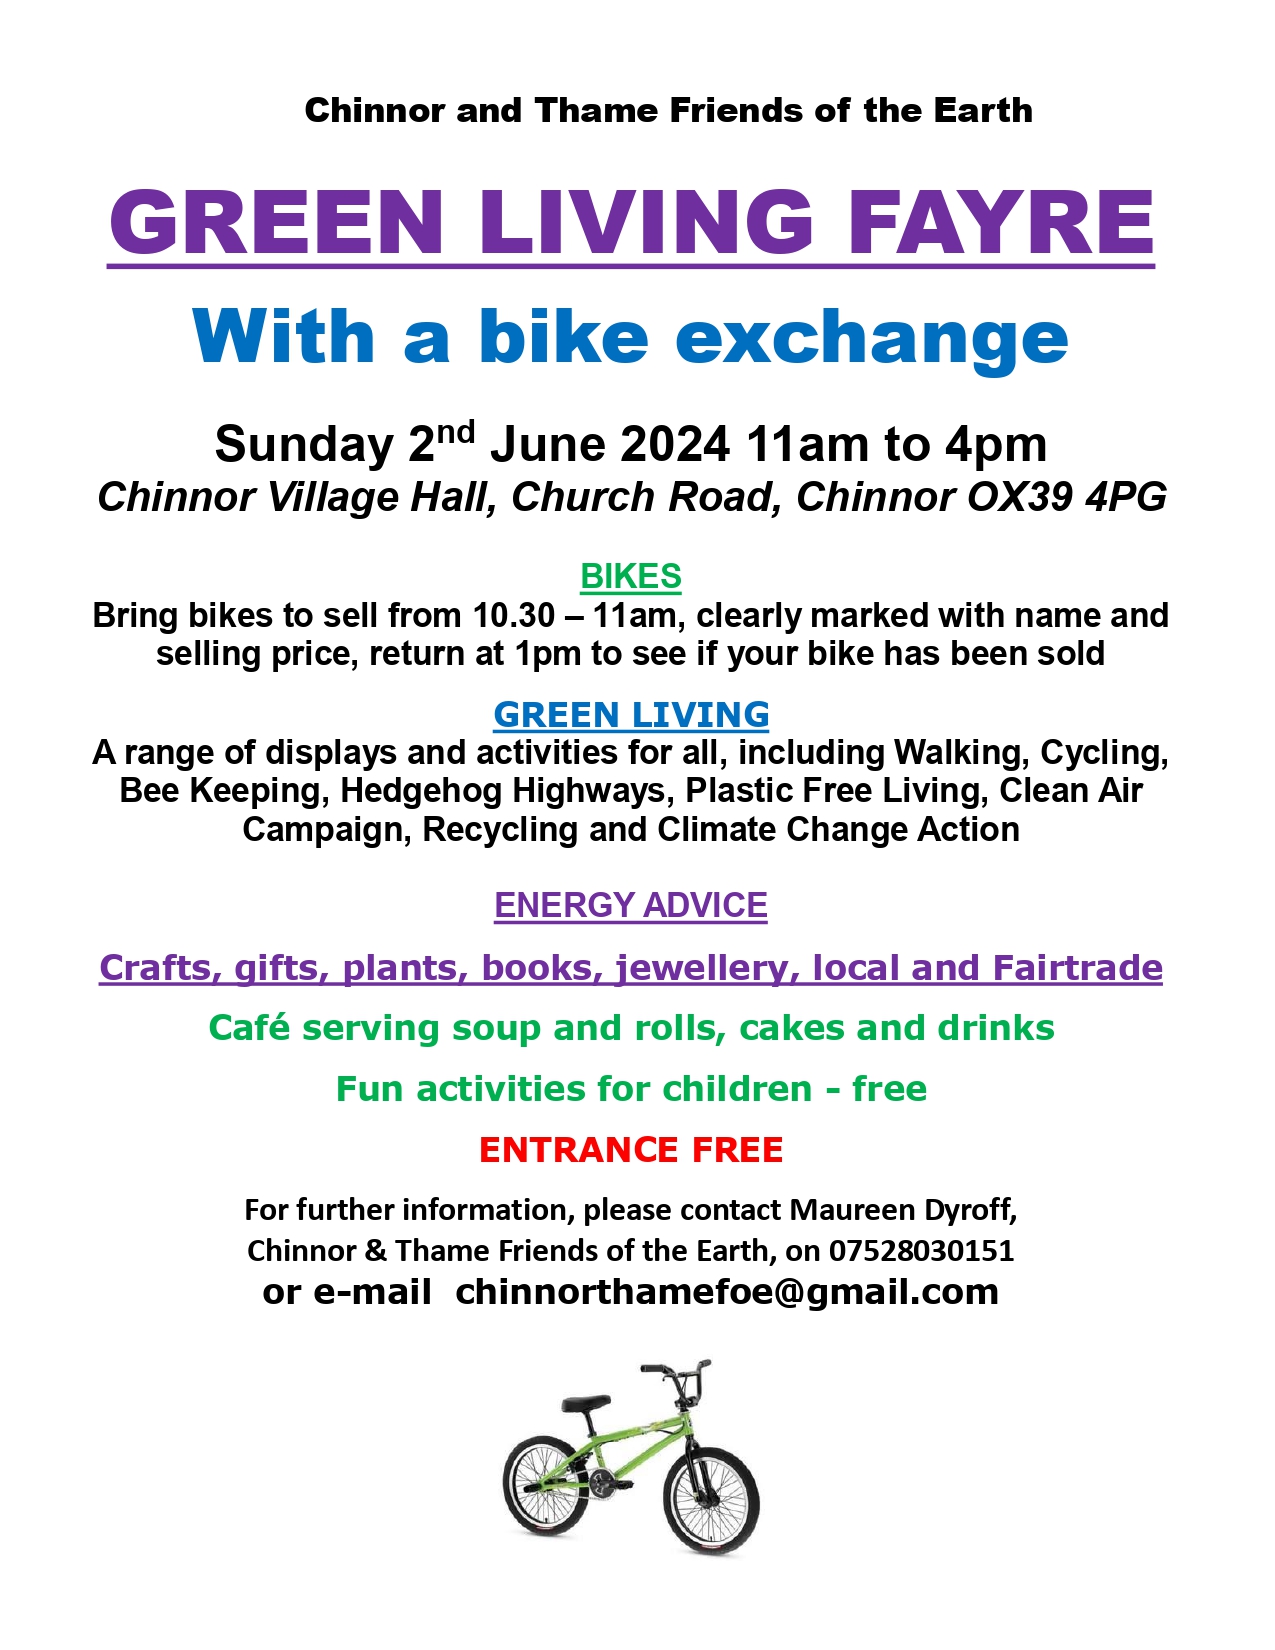 Green Living Fayre with bike exchange